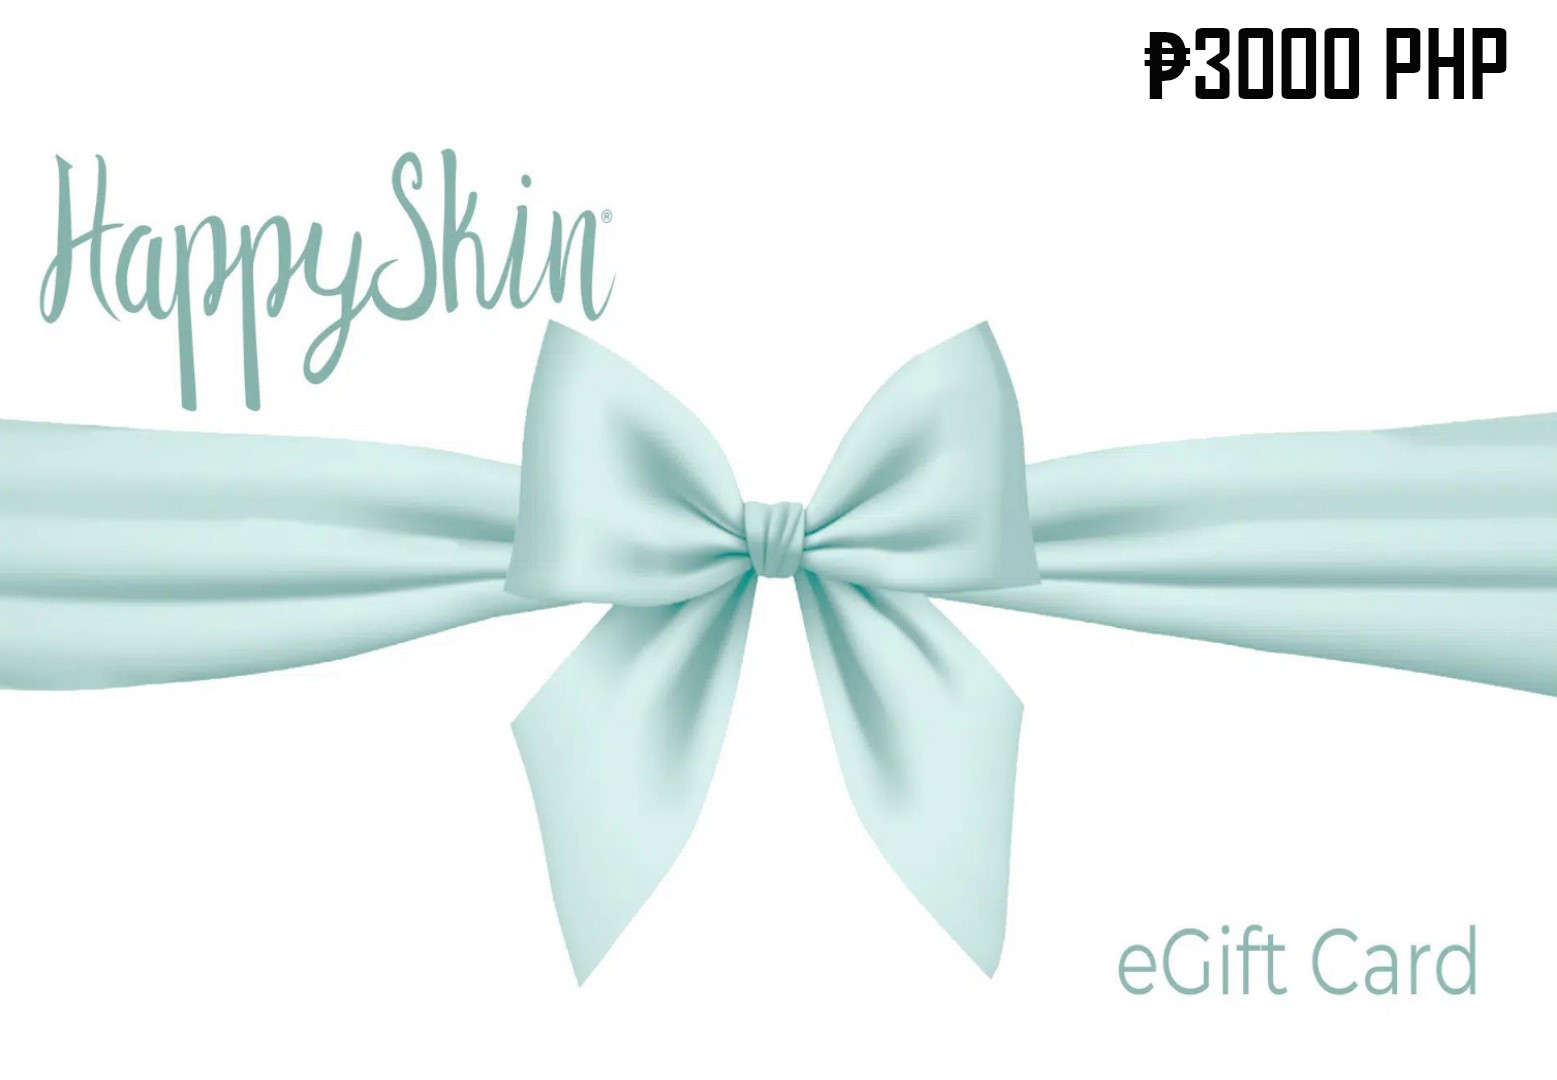 Happy Skin ₱3000 PH Gift Card 62.52 $